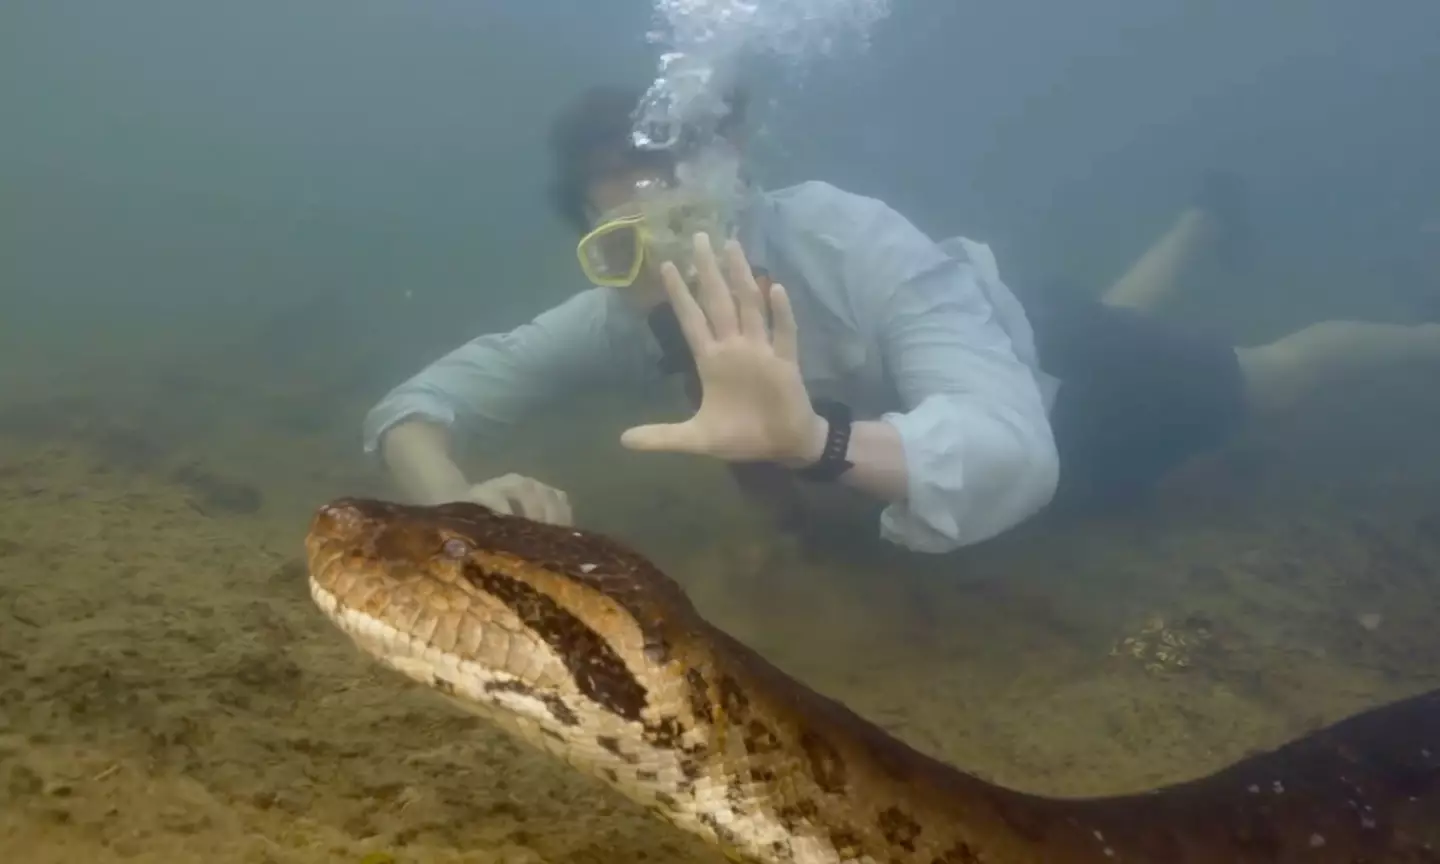 Scientist Professor Freek Vank said it was the biggest snake he’d ever seen.